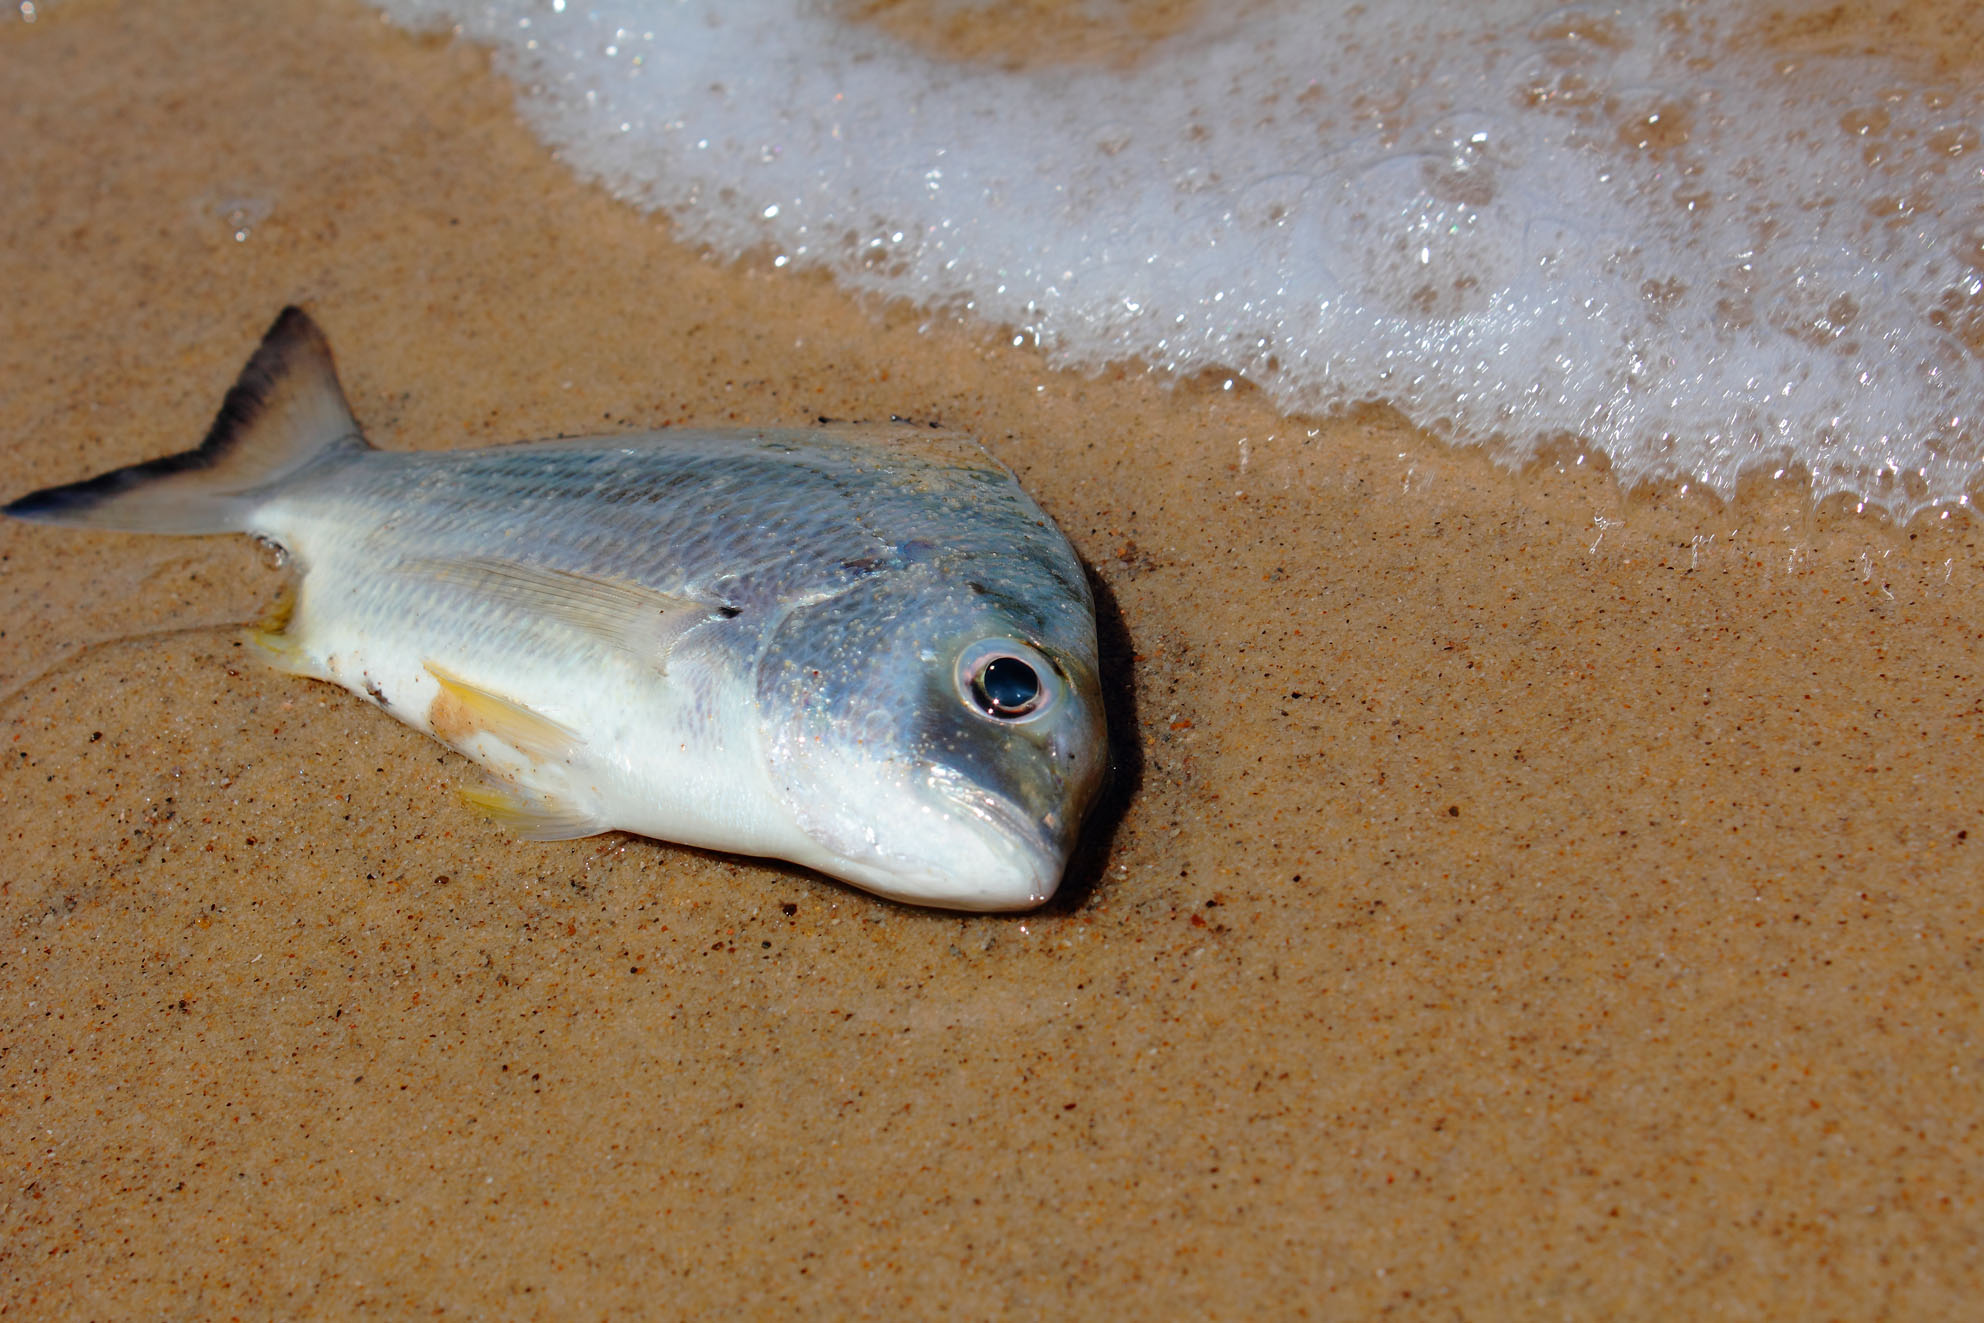 Dead fish on beach photo